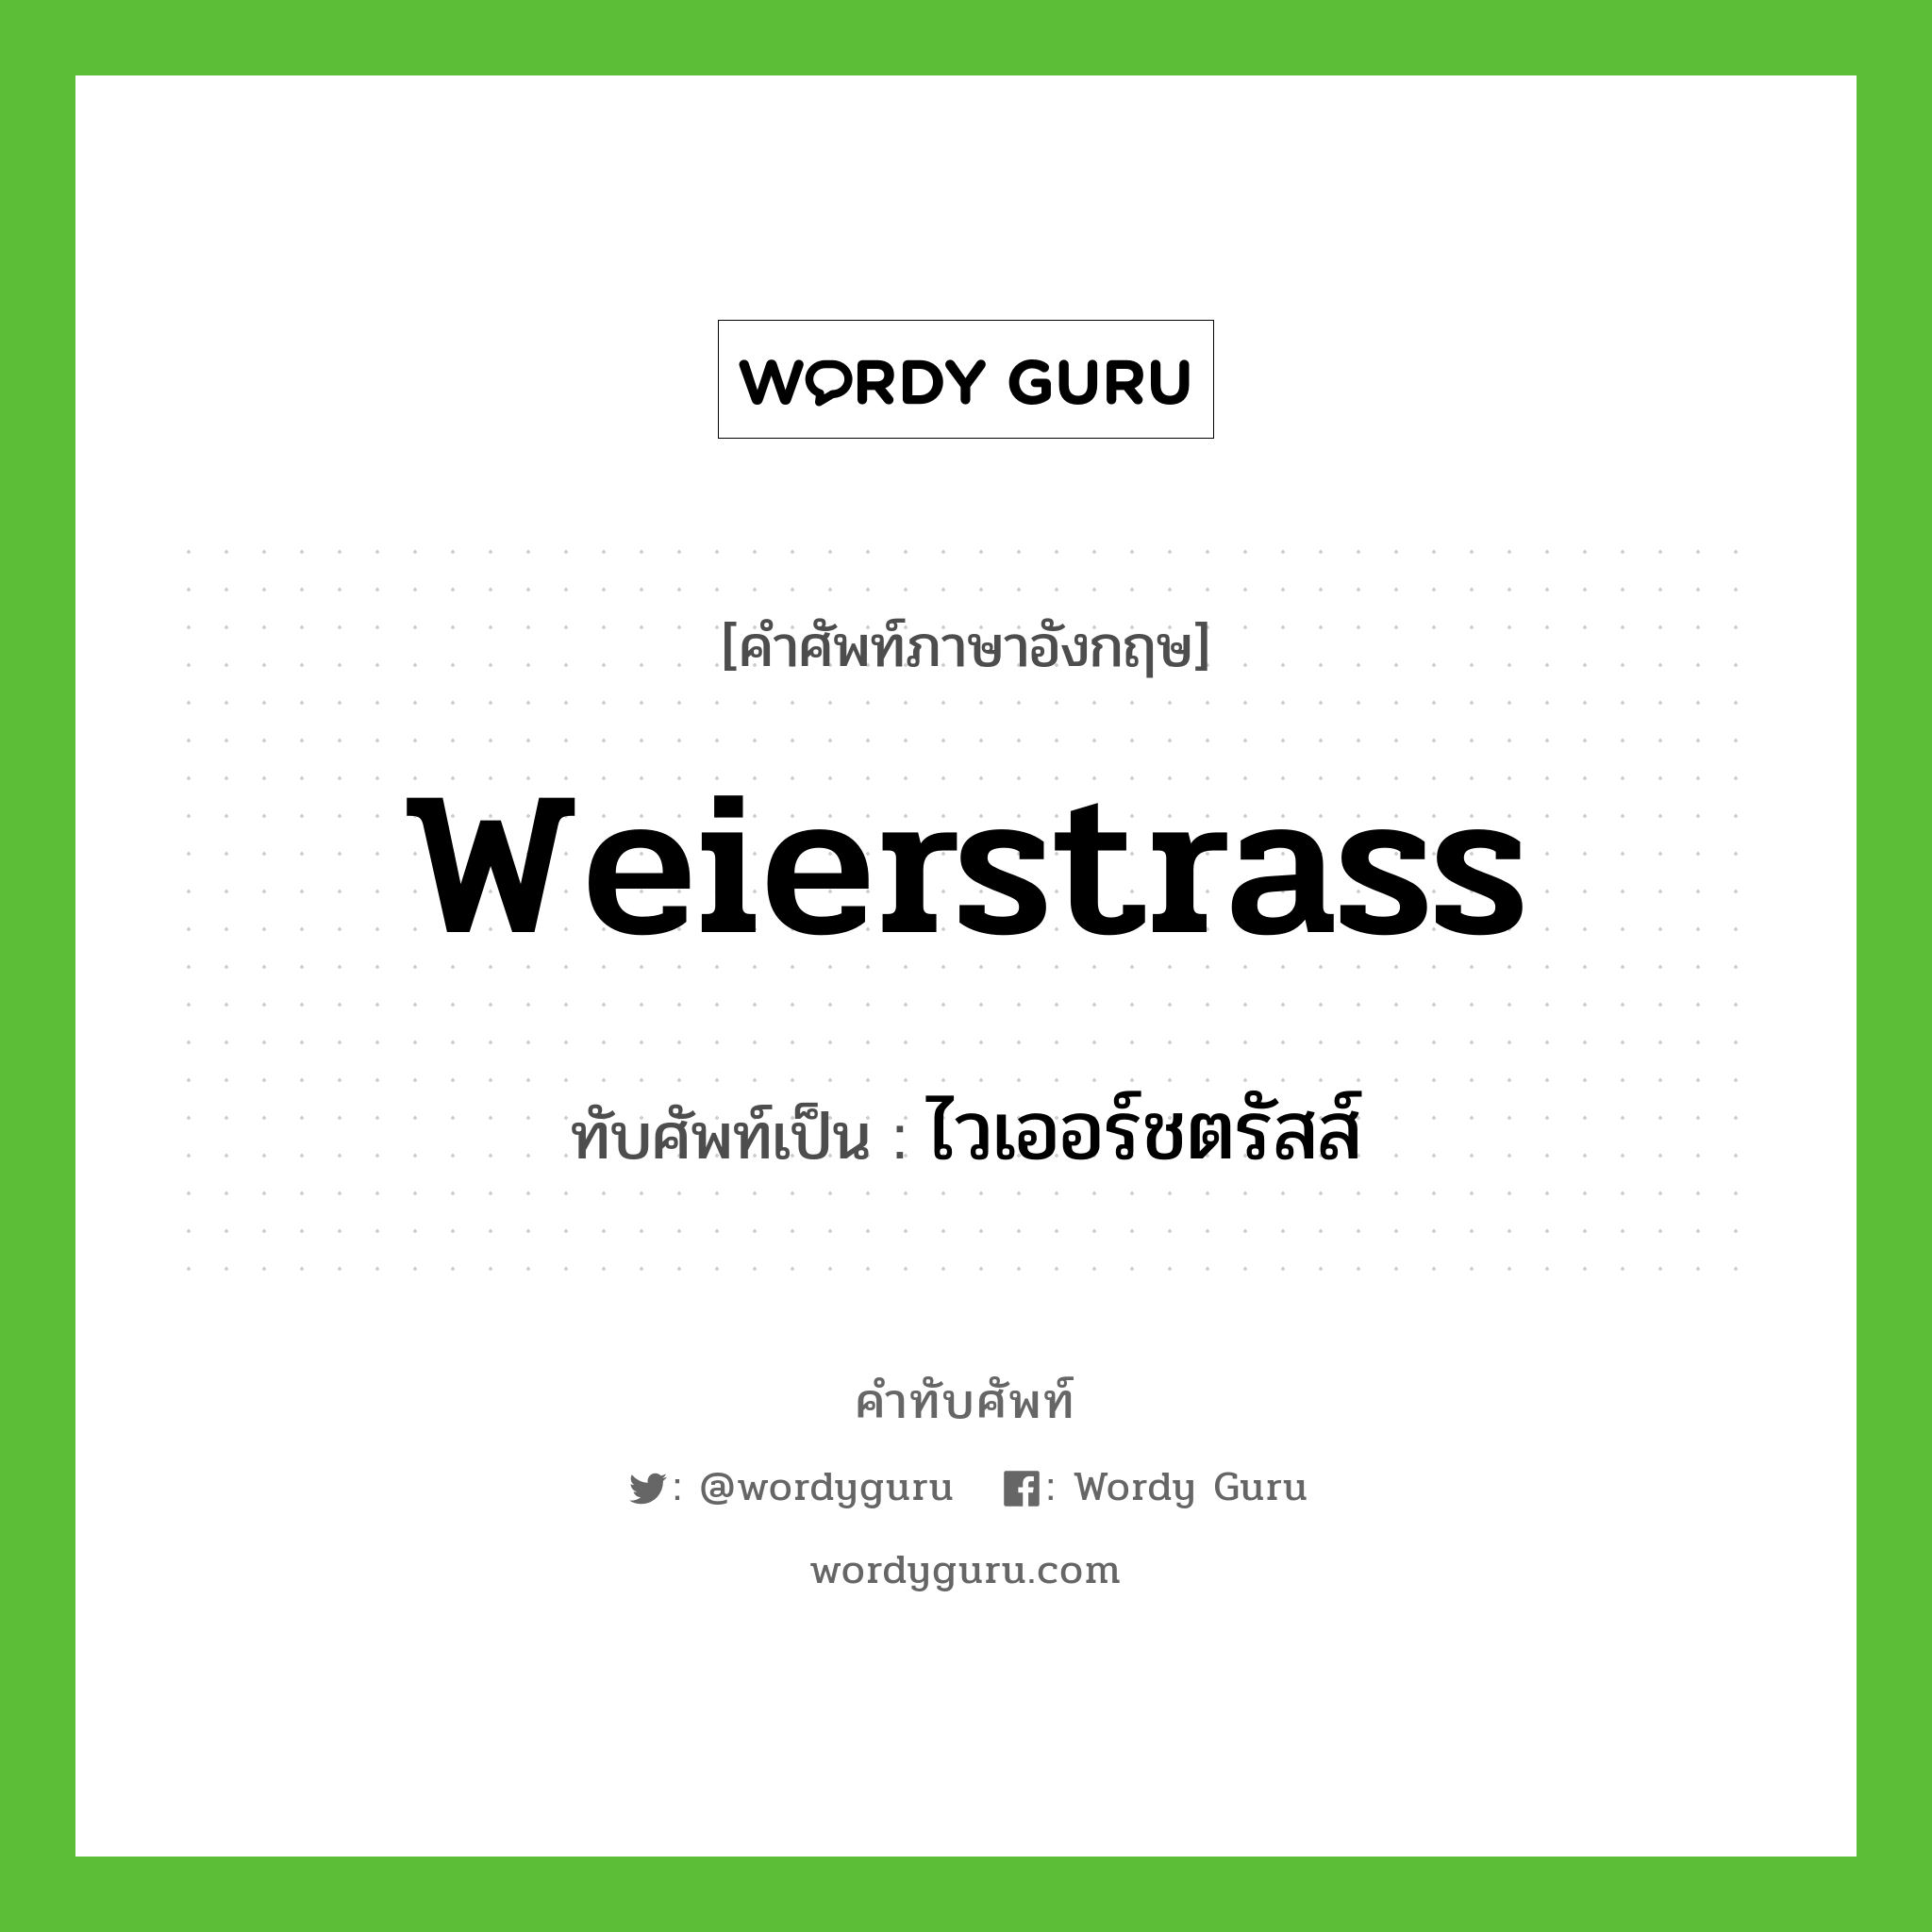 Weierstrass เขียนเป็นคำไทยว่าอะไร?, คำศัพท์ภาษาอังกฤษ Weierstrass ทับศัพท์เป็น ไวเออร์ชตรัสส์